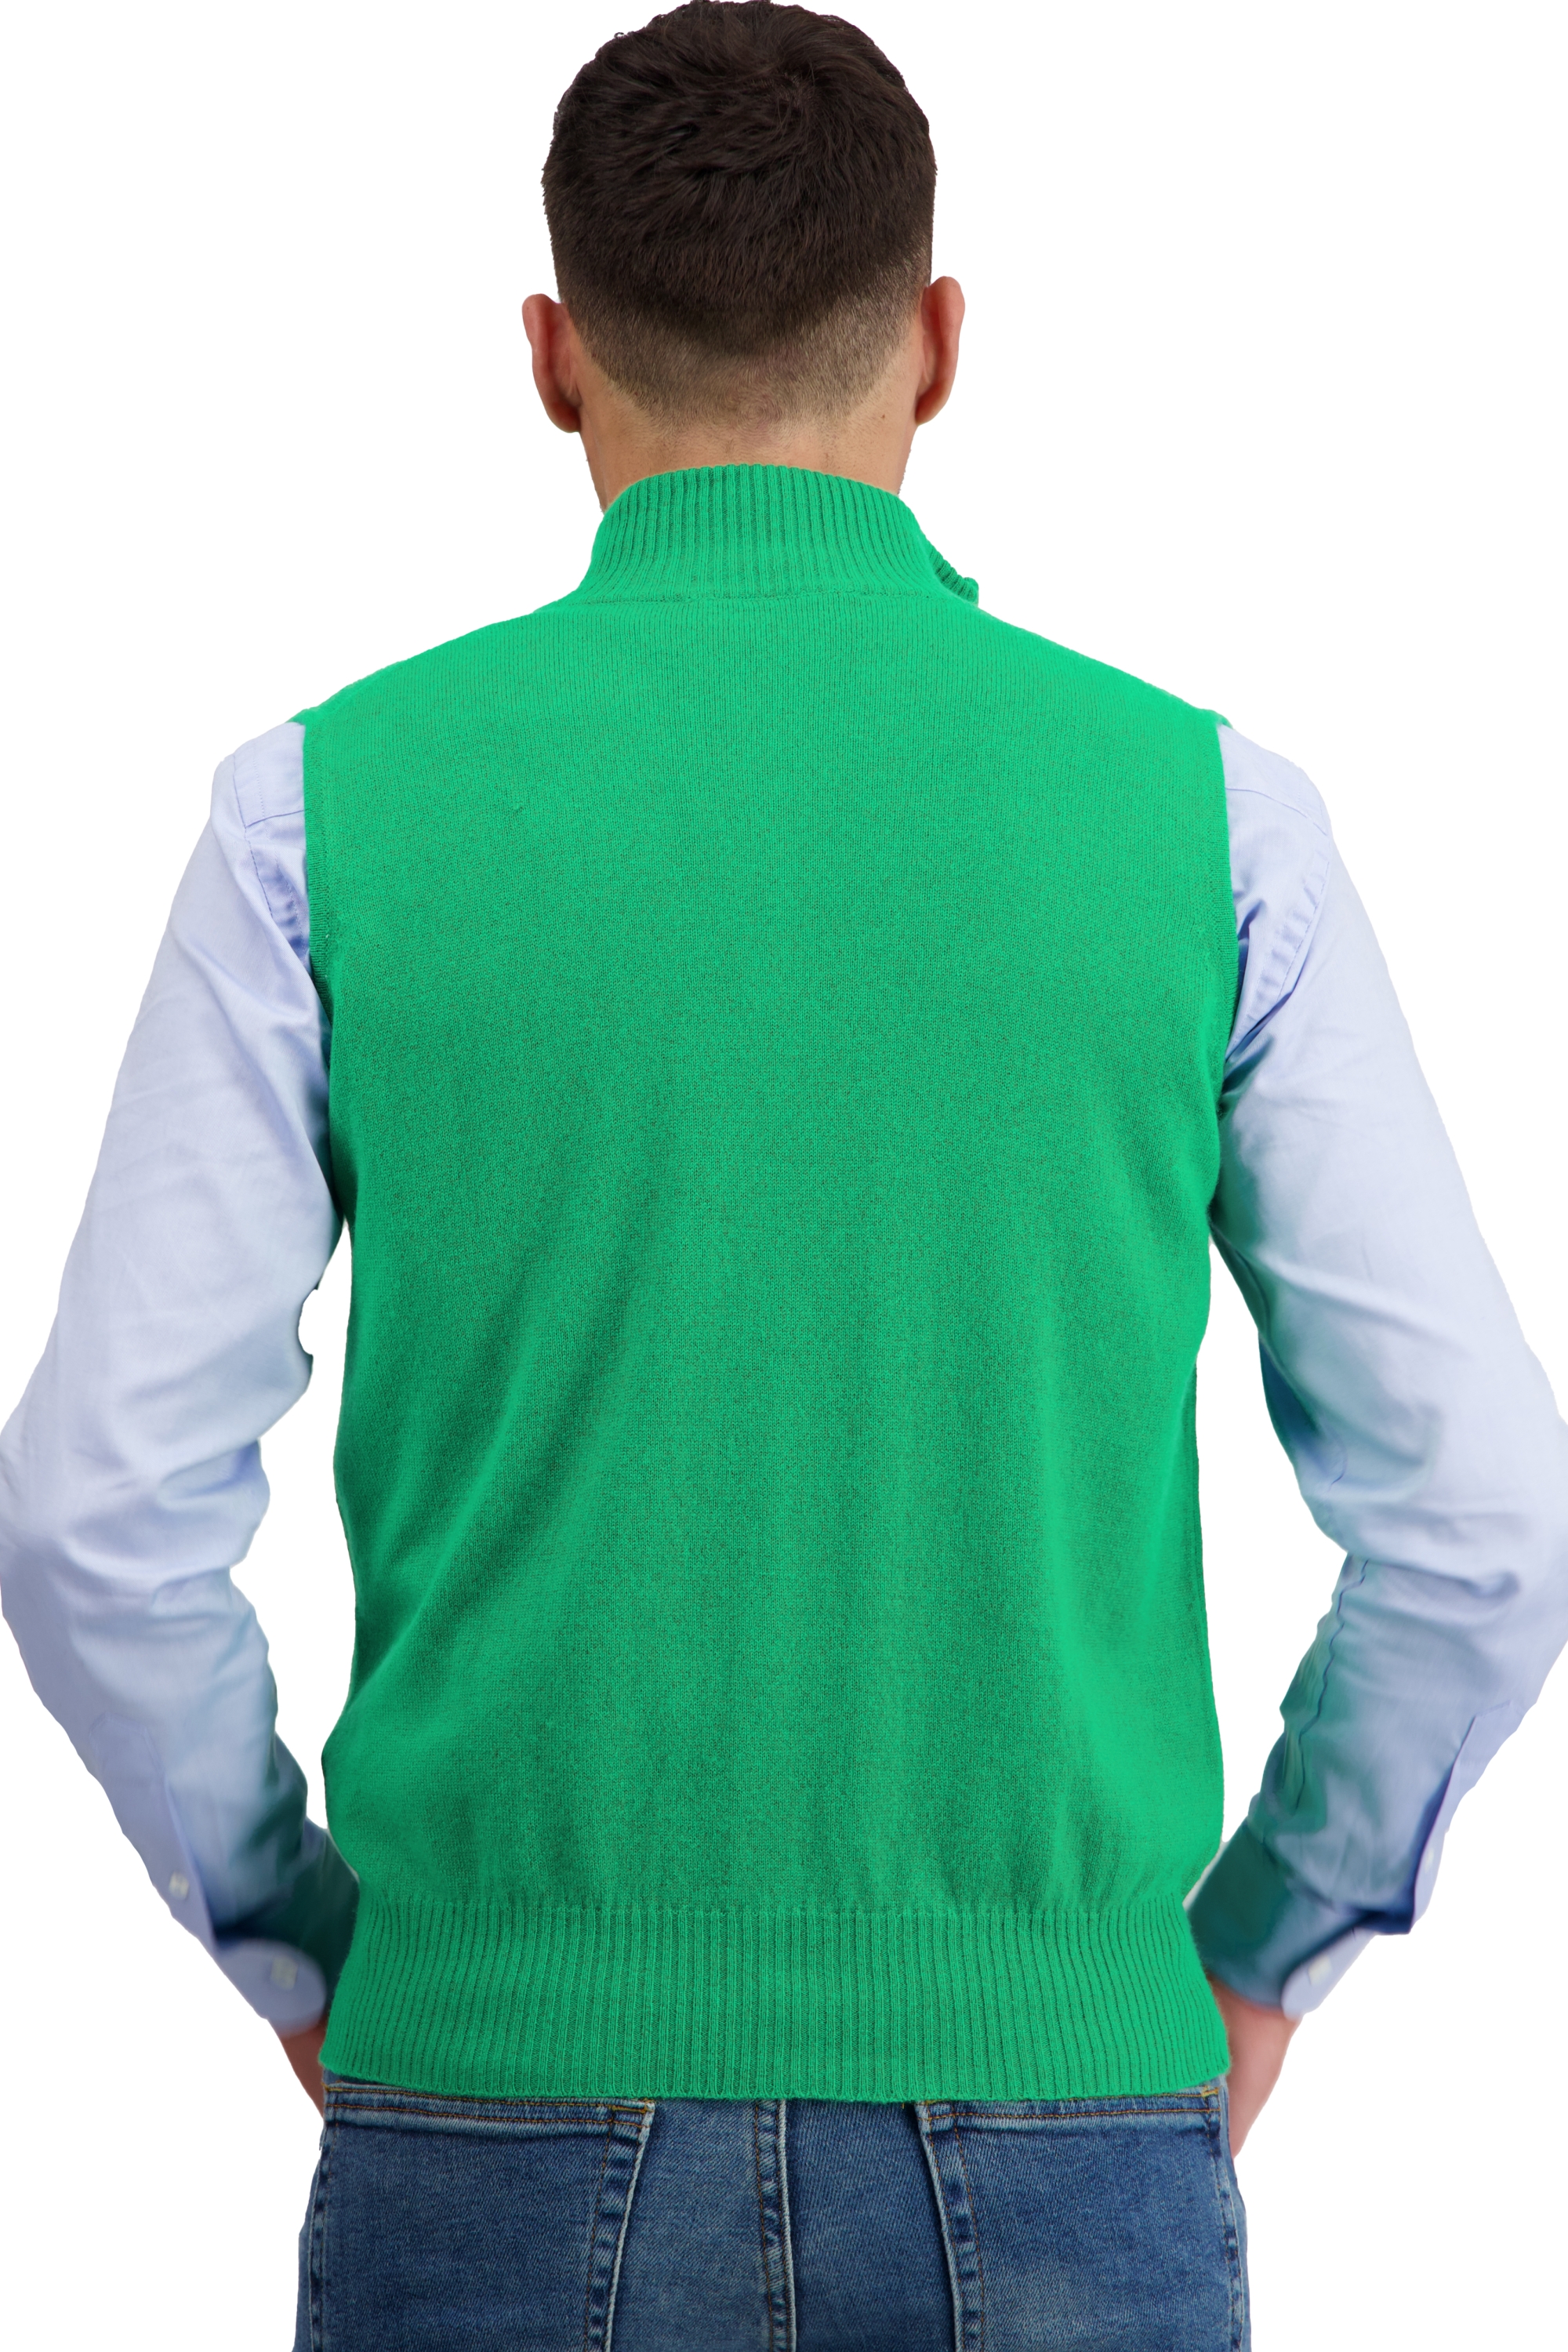 Cashmere men waistcoat sleeveless sweaters dali new green m